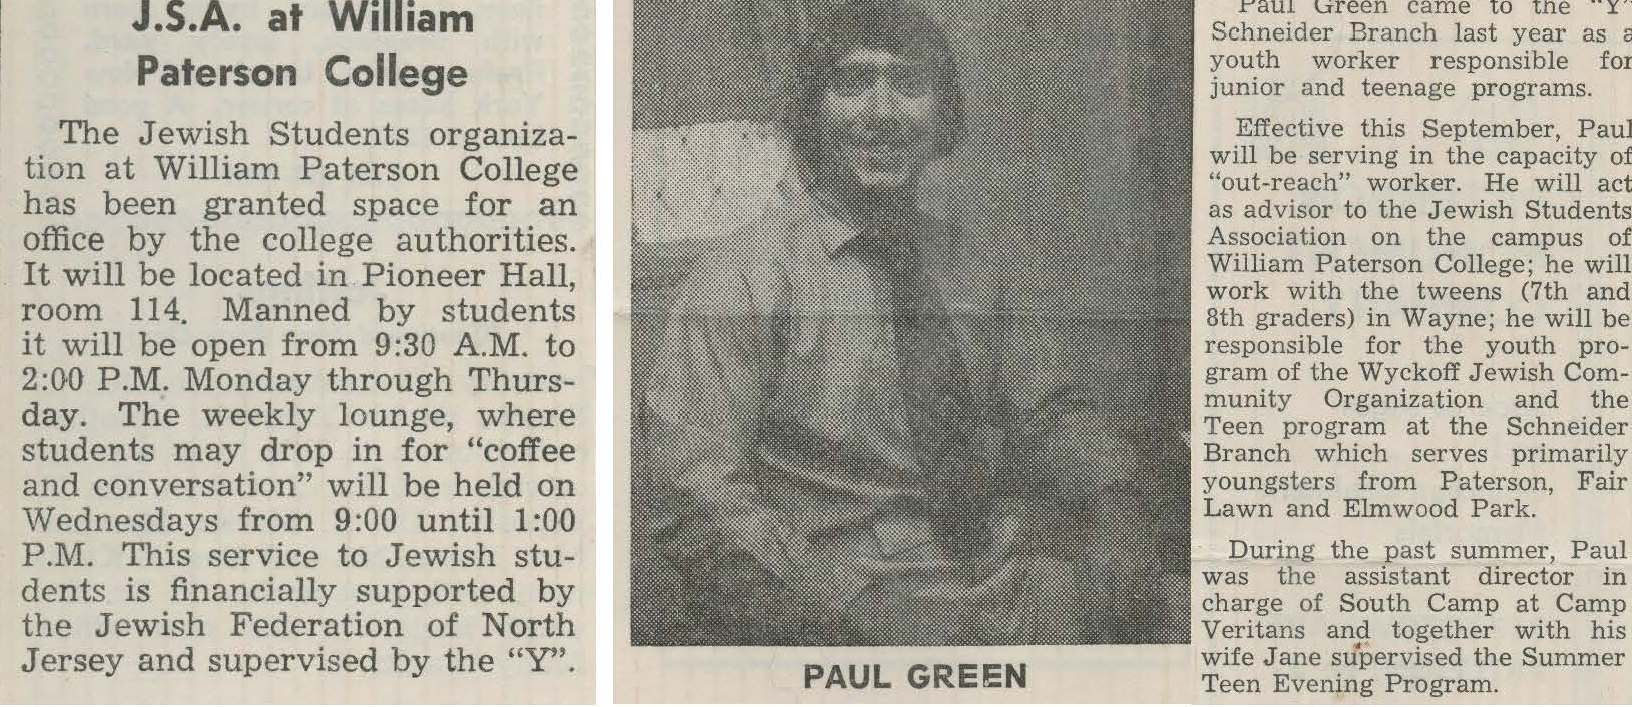 Paul Green, Jewish Student Association advisor, William Paterson College